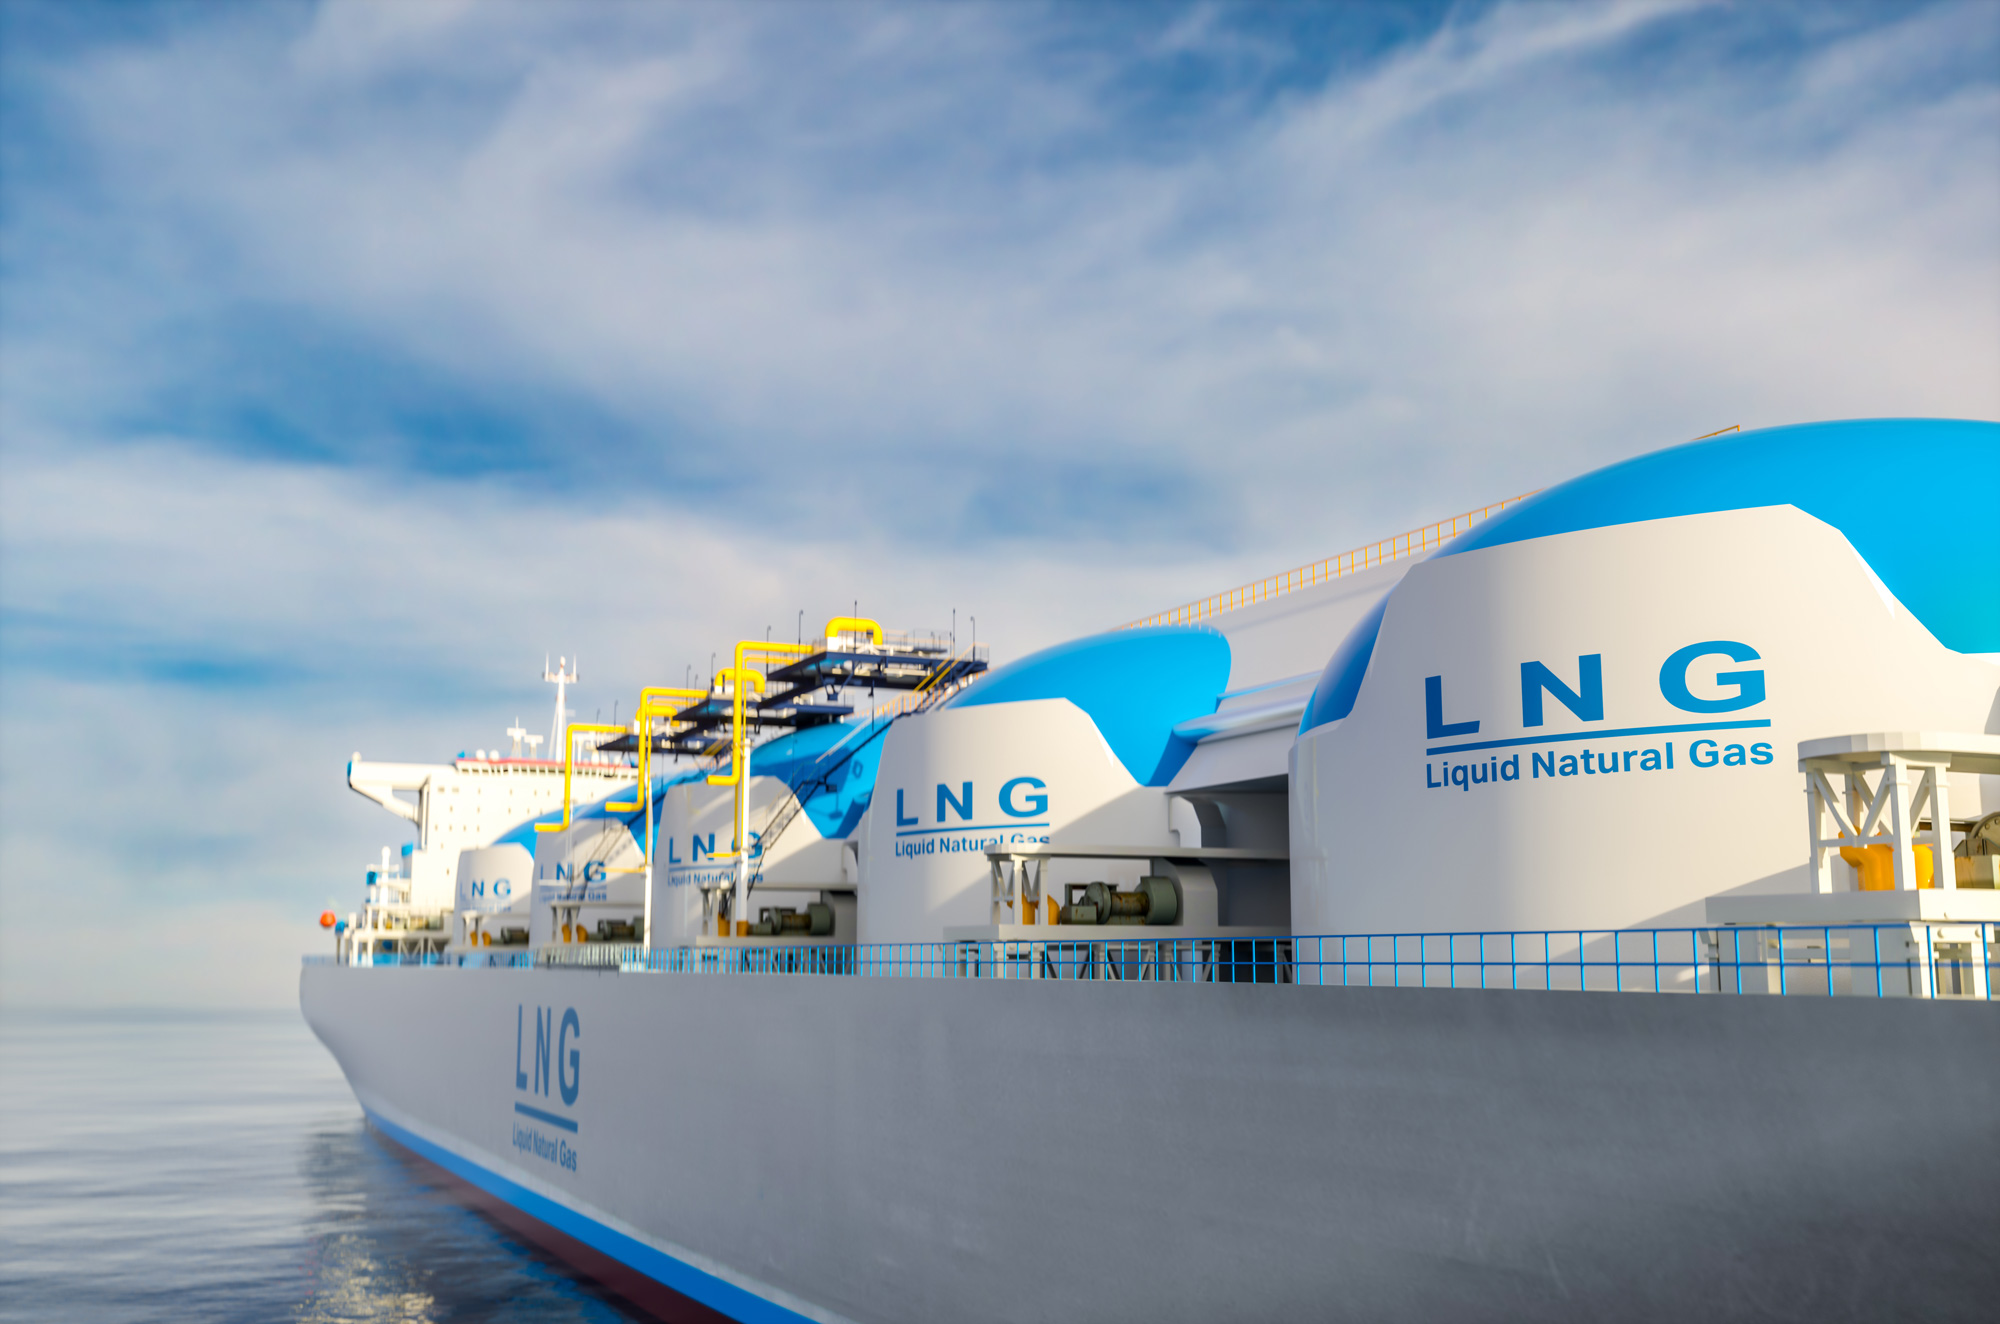 Schwimmendes LNG-Terminal mit der Aufschrift „LNG Liquid Natural Gas“.